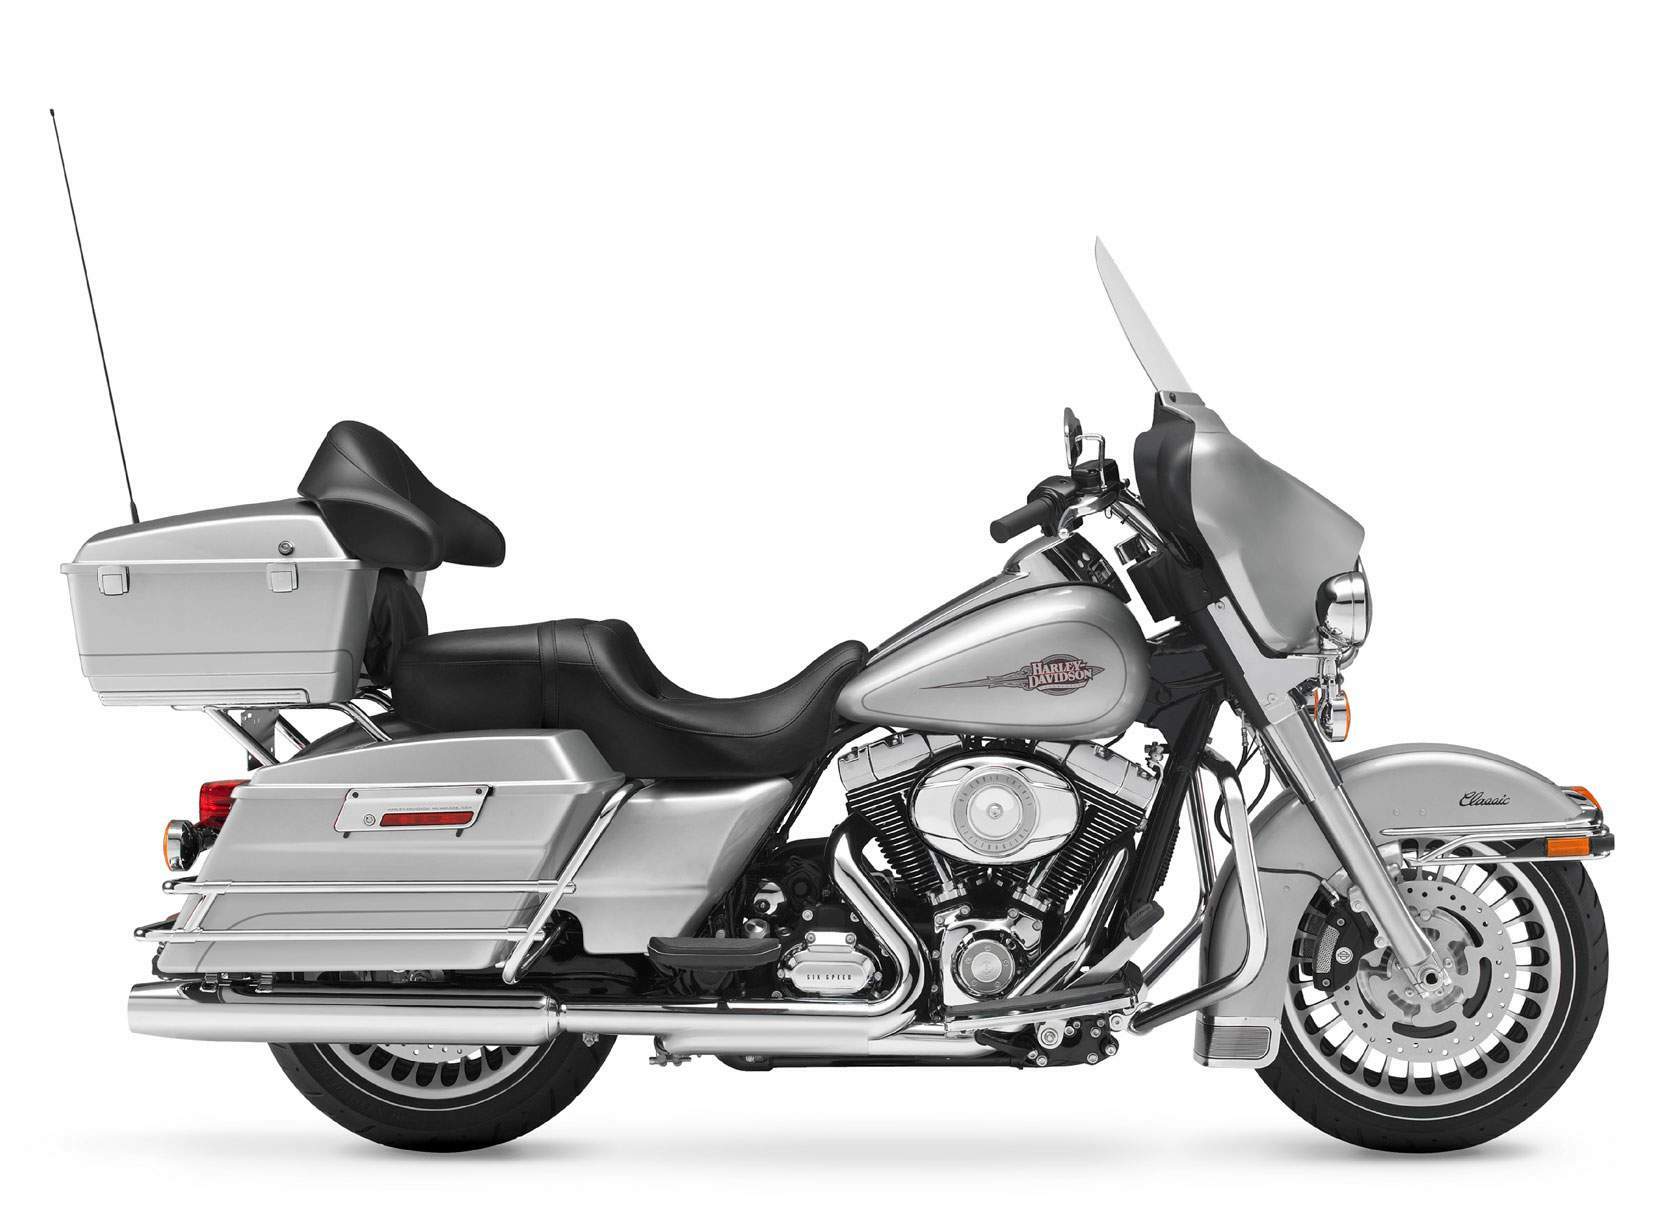 Harley-Davidson Harley Davidson FLHTC Electra Glide Classic (2011) especificaciones técnicas